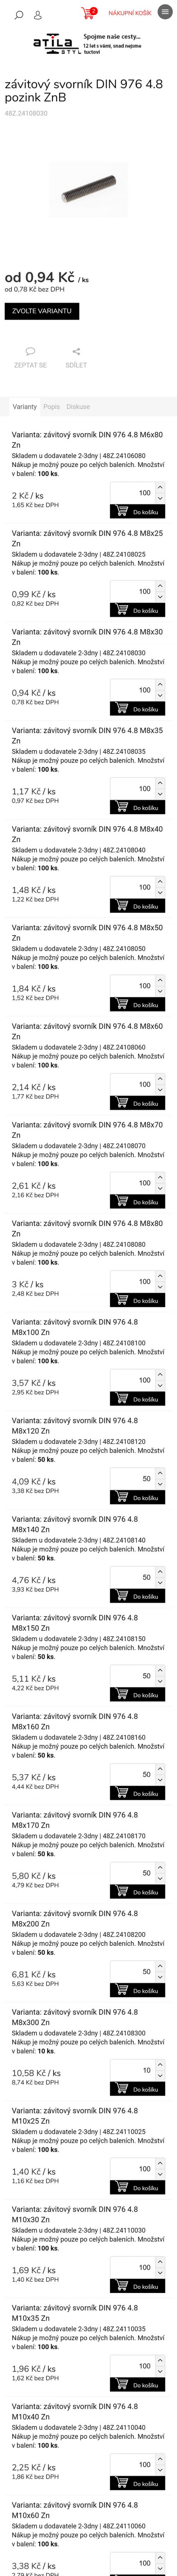 Tvorba nového e-shopu Atilashop.cz - Screenshot mobilní verze